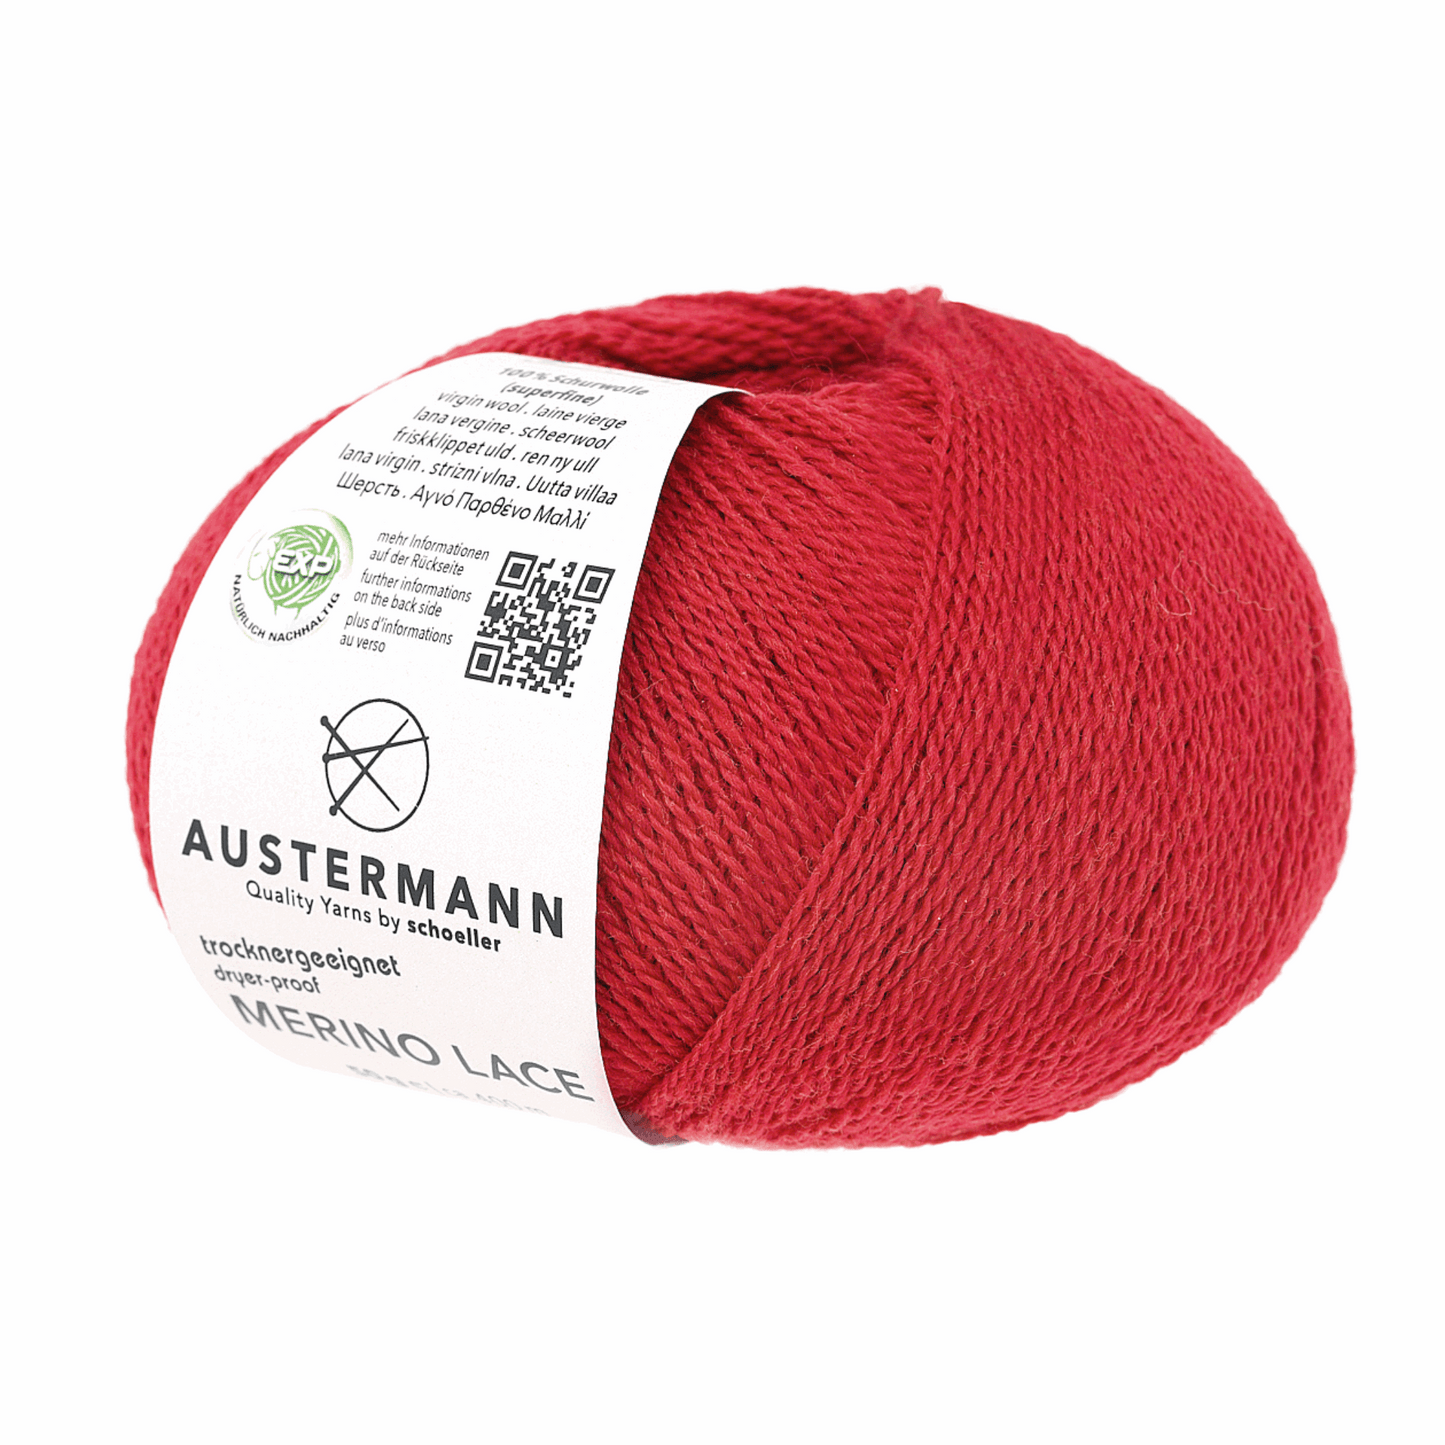 Austermann Merino Lace EXP 50g, 97615, Farbe rubin 23